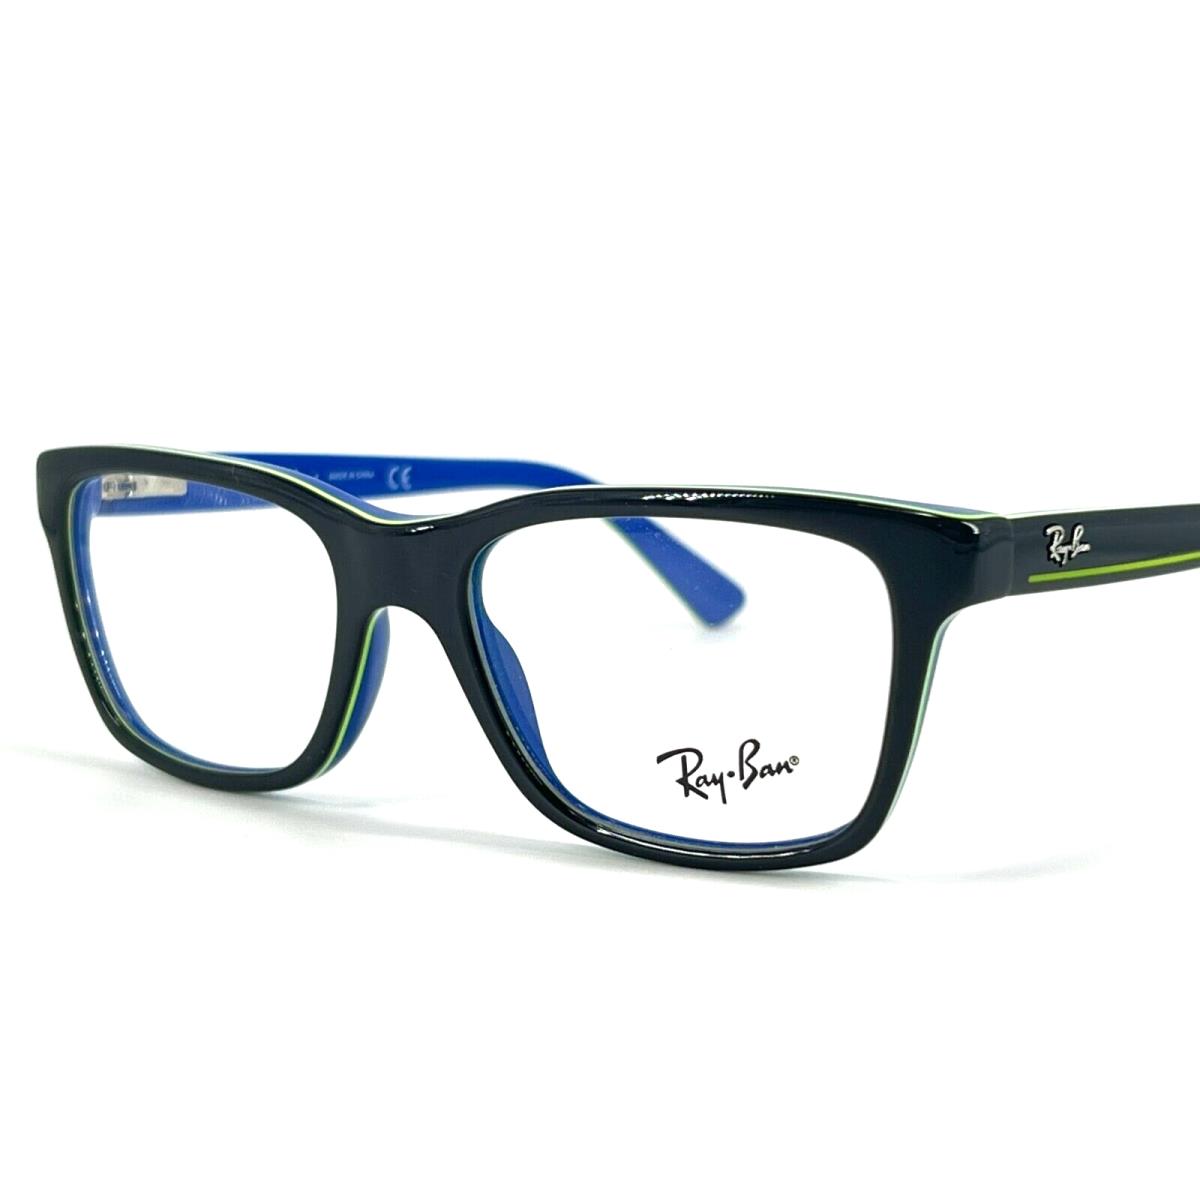 Ray-ban Rayban Youth RB1536 Kids Plastic Eyeglass Frame 3600 Dark Grey on Blue 48-16